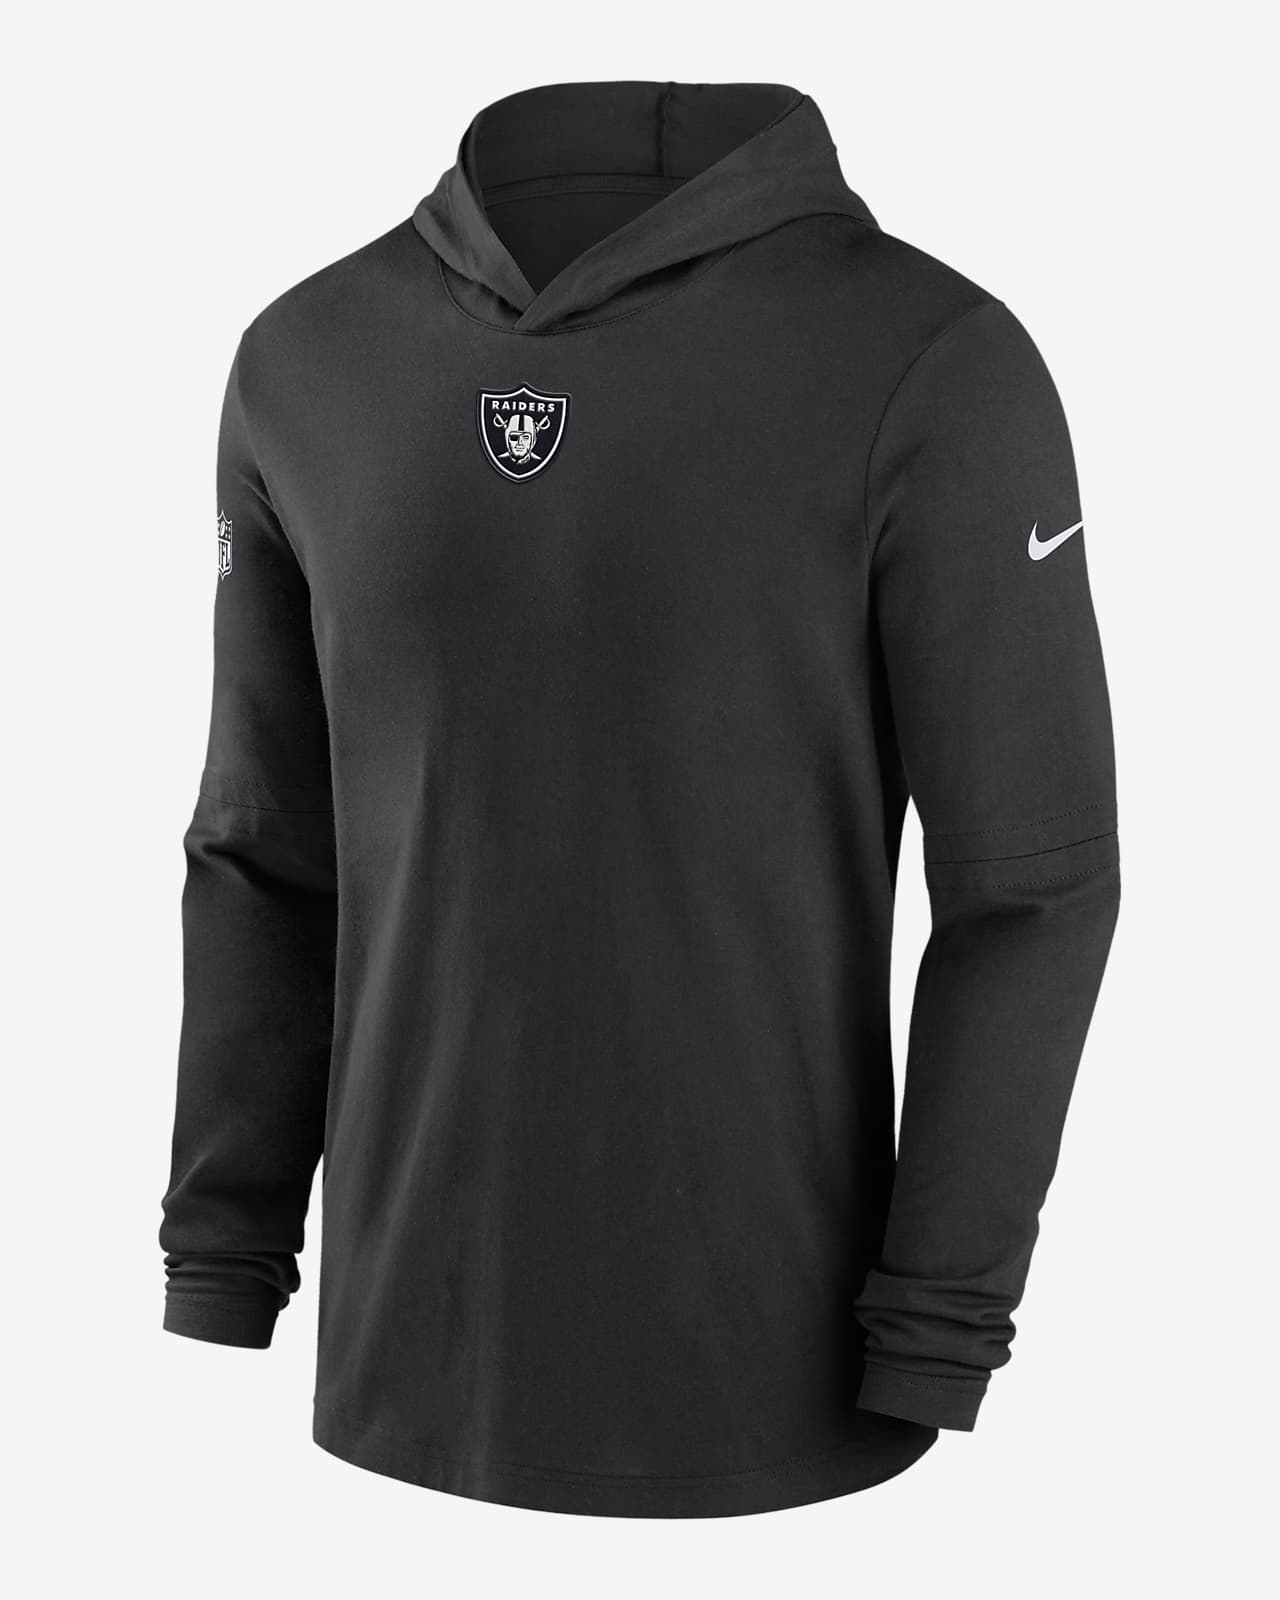 Nike Men's Las Vegas Raiders Sideline Team Long-Sleeve T-Shirt